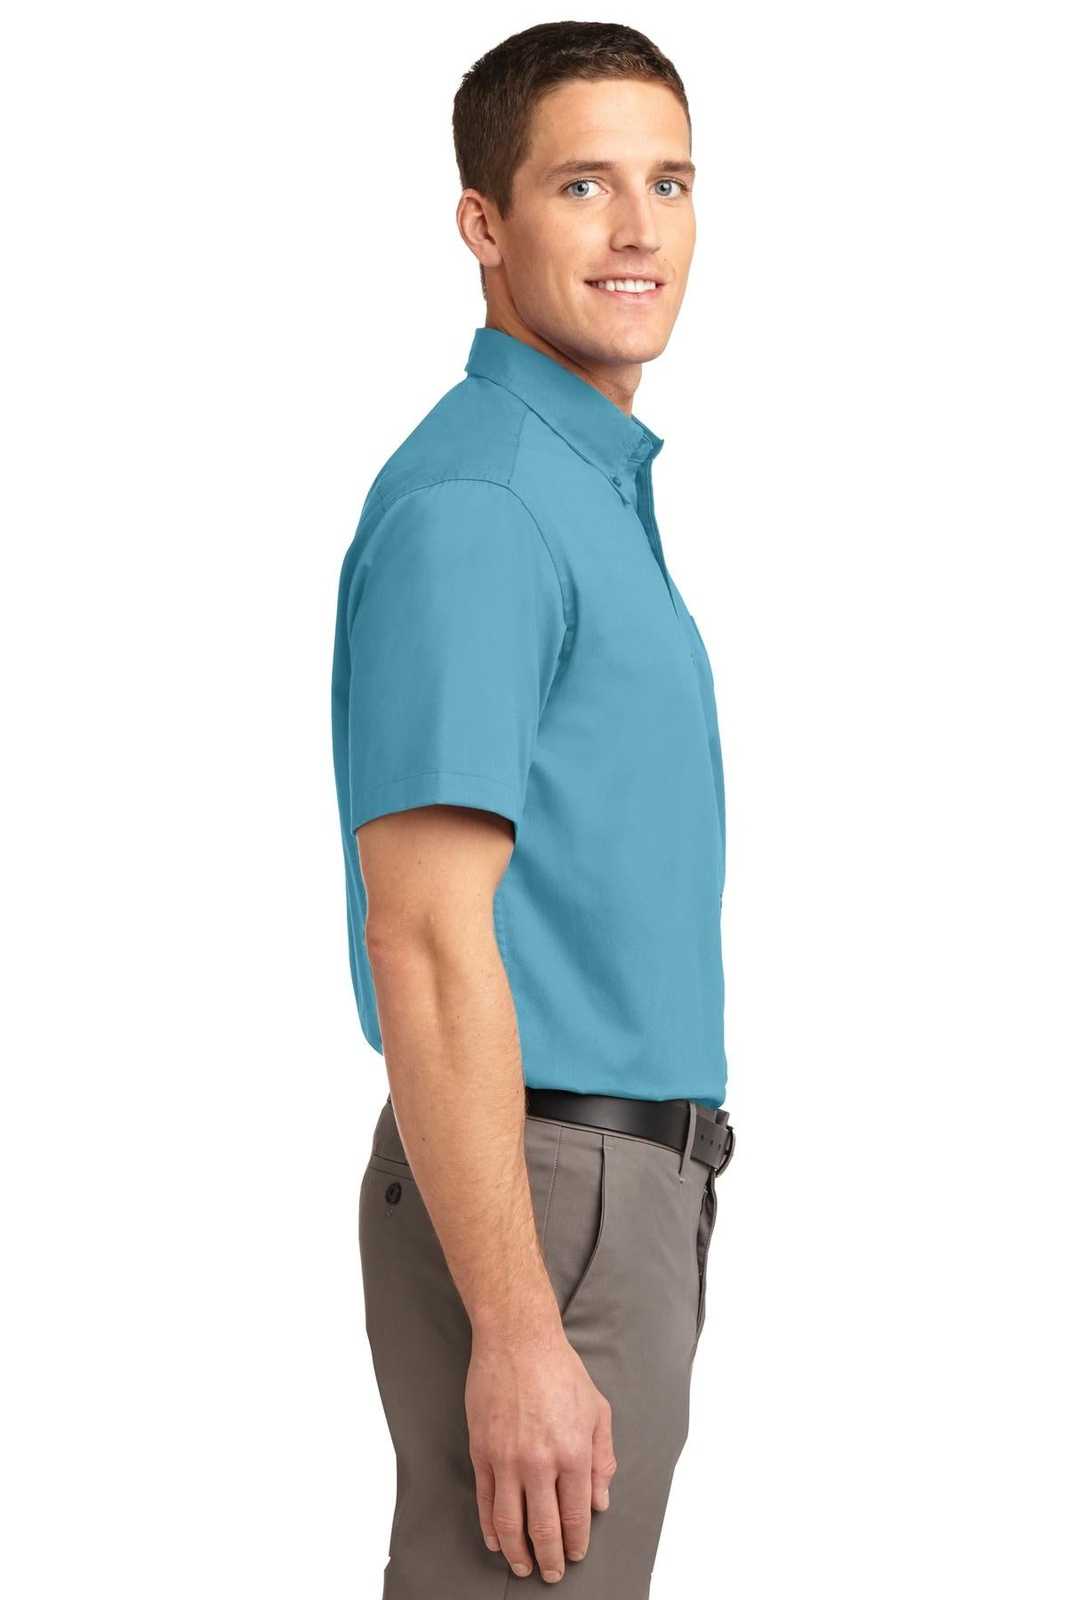 Port Authority S508 Short Sleeve Easy Care Shirt - Maui Blue - HIT a Double - 3